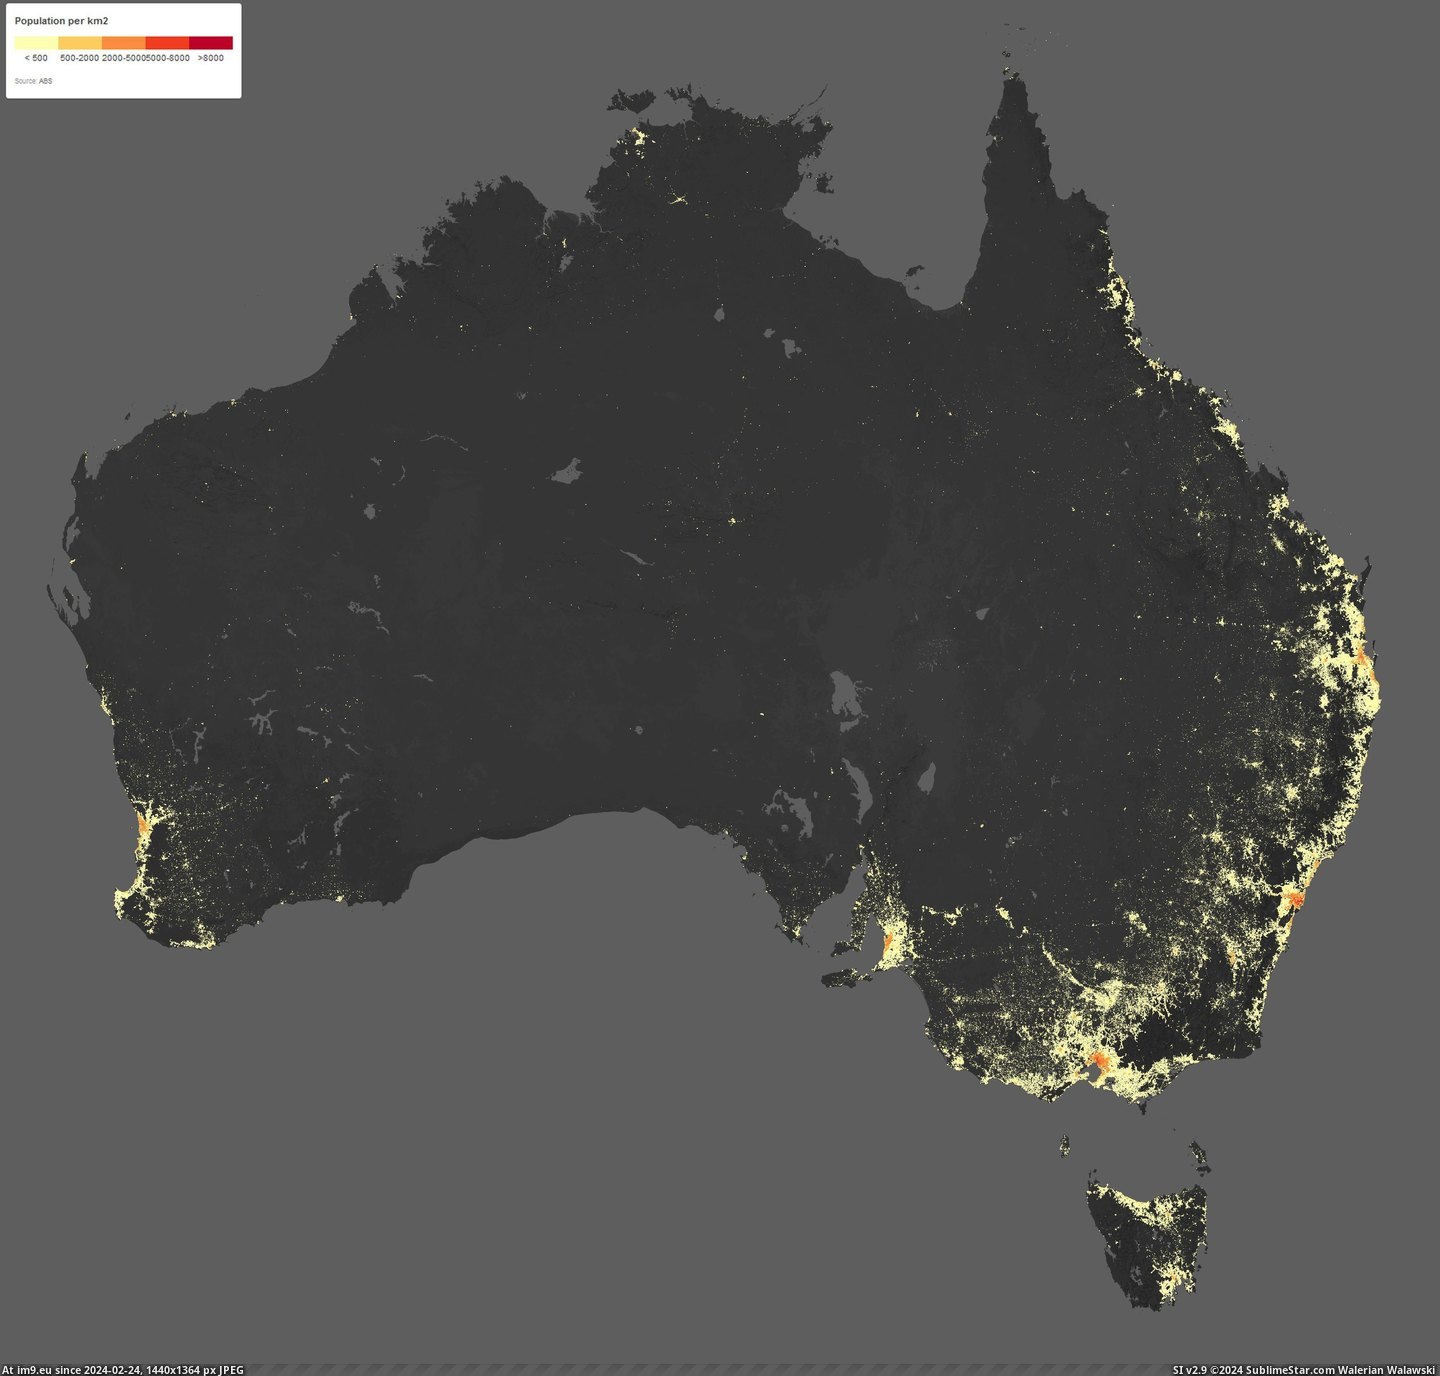 #Population #Density #Australia [Mapporn] Australia's Population Density [4000x3800] Pic. (Image of album My r/MAPS favs))